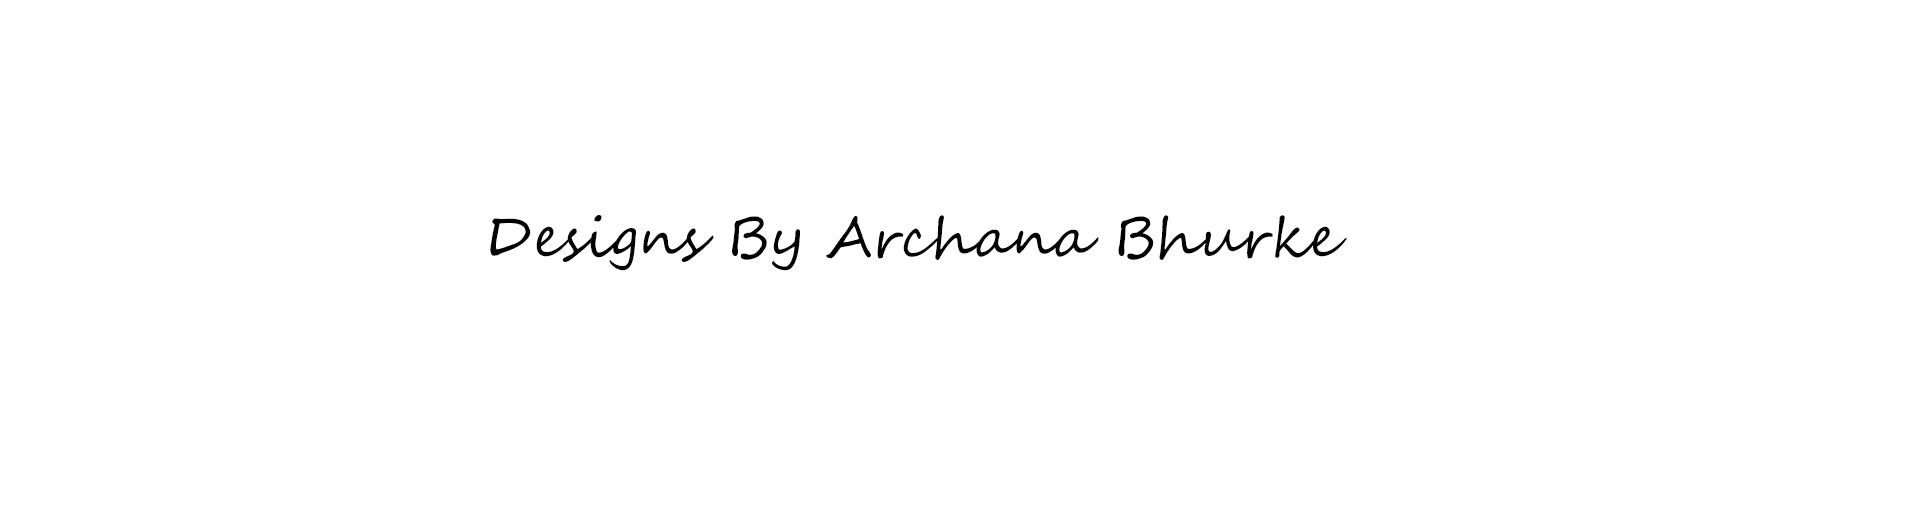 Archana Bhurke